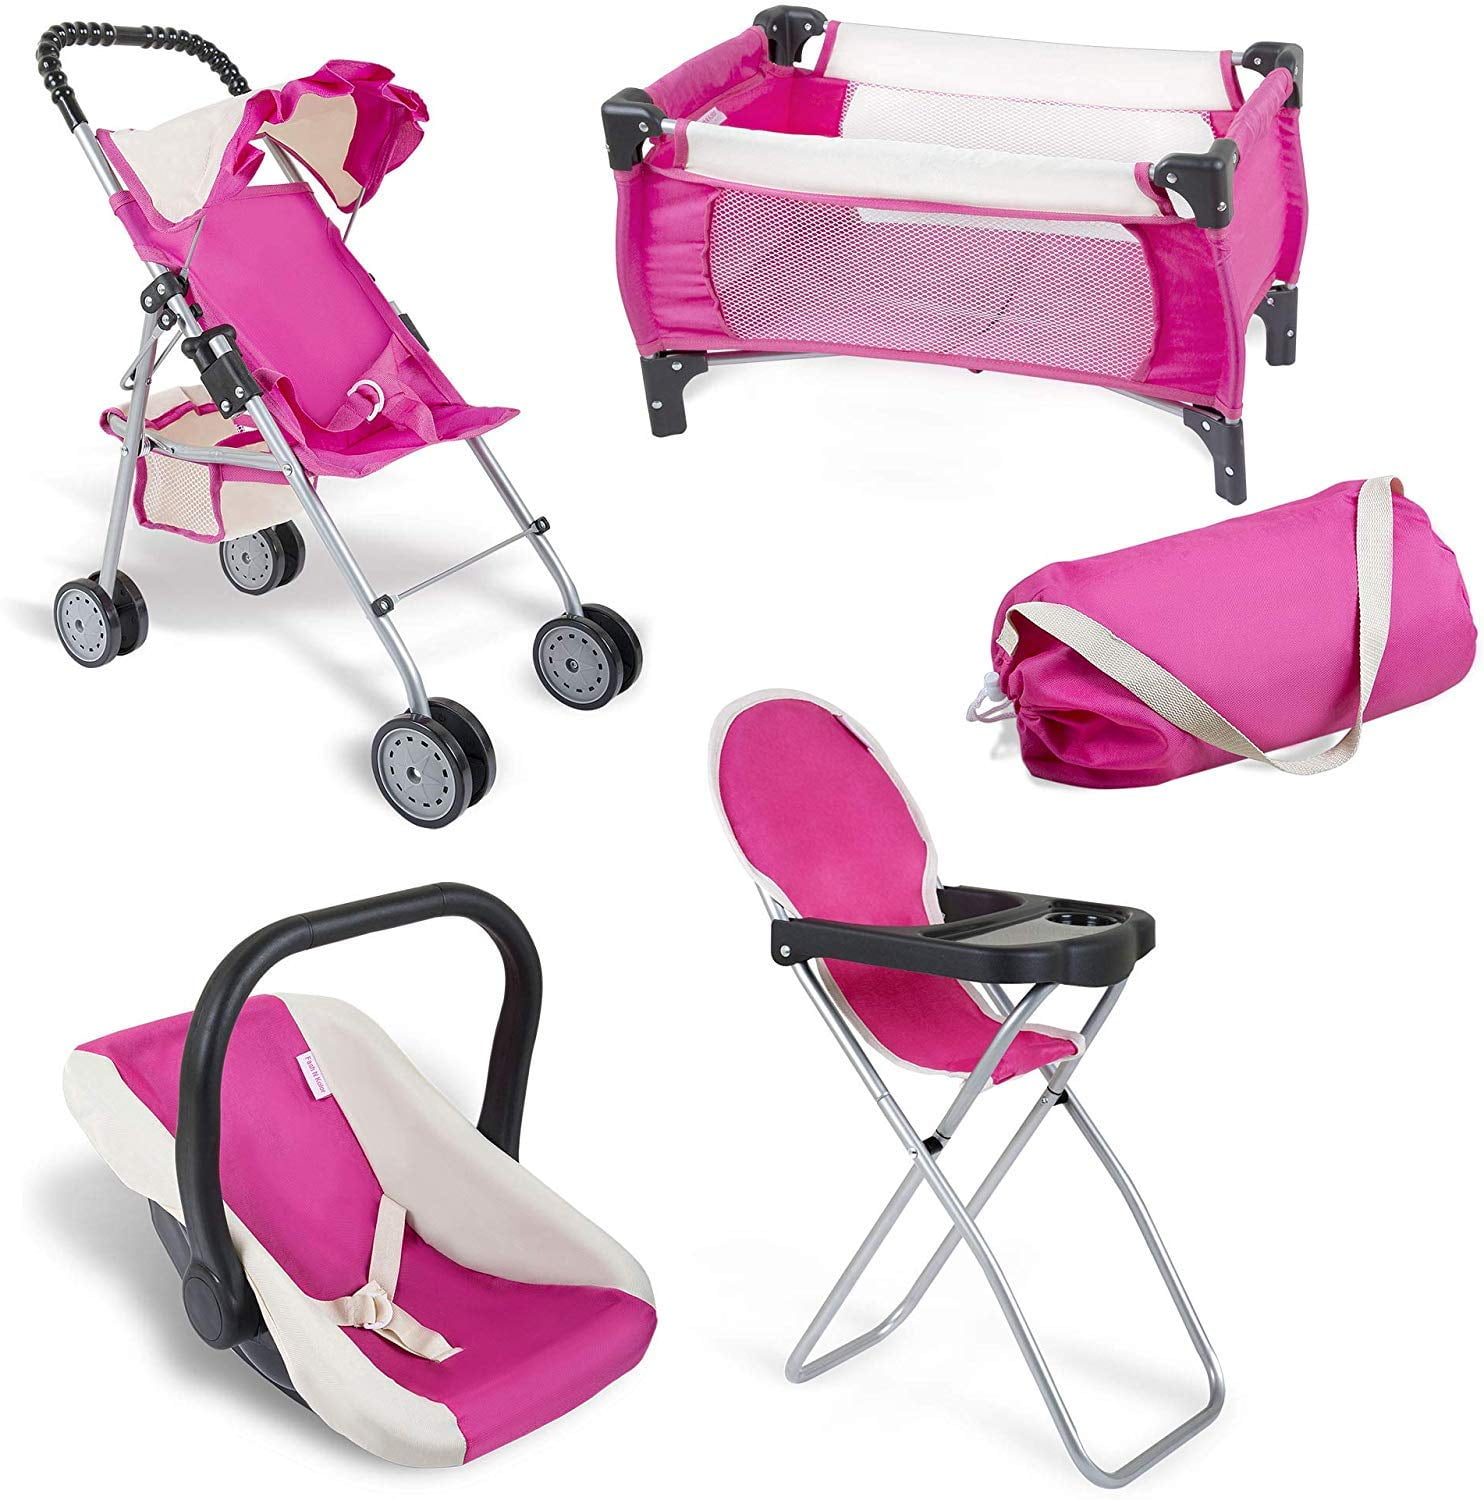 baby stroller set toy